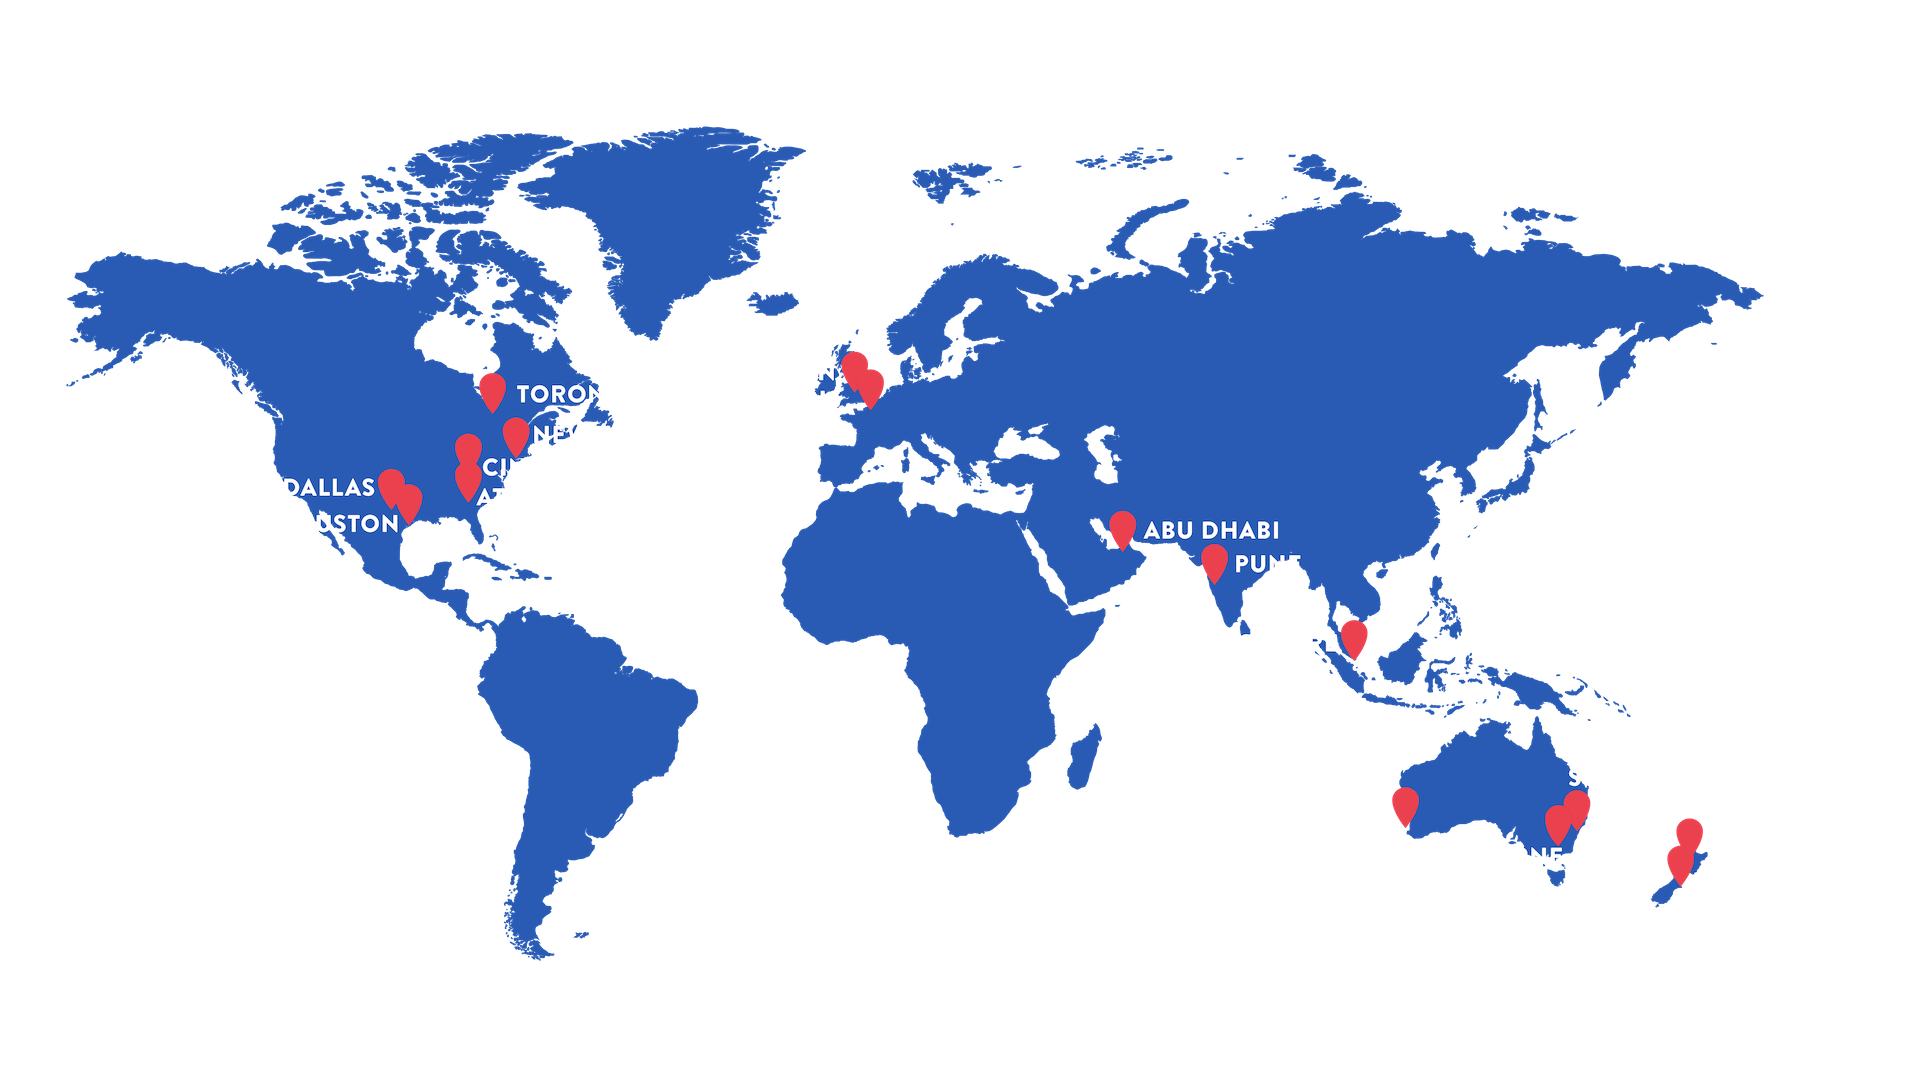 TTC global office location are Dallas, Houston, Atlantic, Cincinnati, Atlanta, New York, Stockholm, London, Pari, Geneva, Abu Dhabi, Pune, Singapore, Manila, Sydney, Melbourne, Auckland and Wellington.